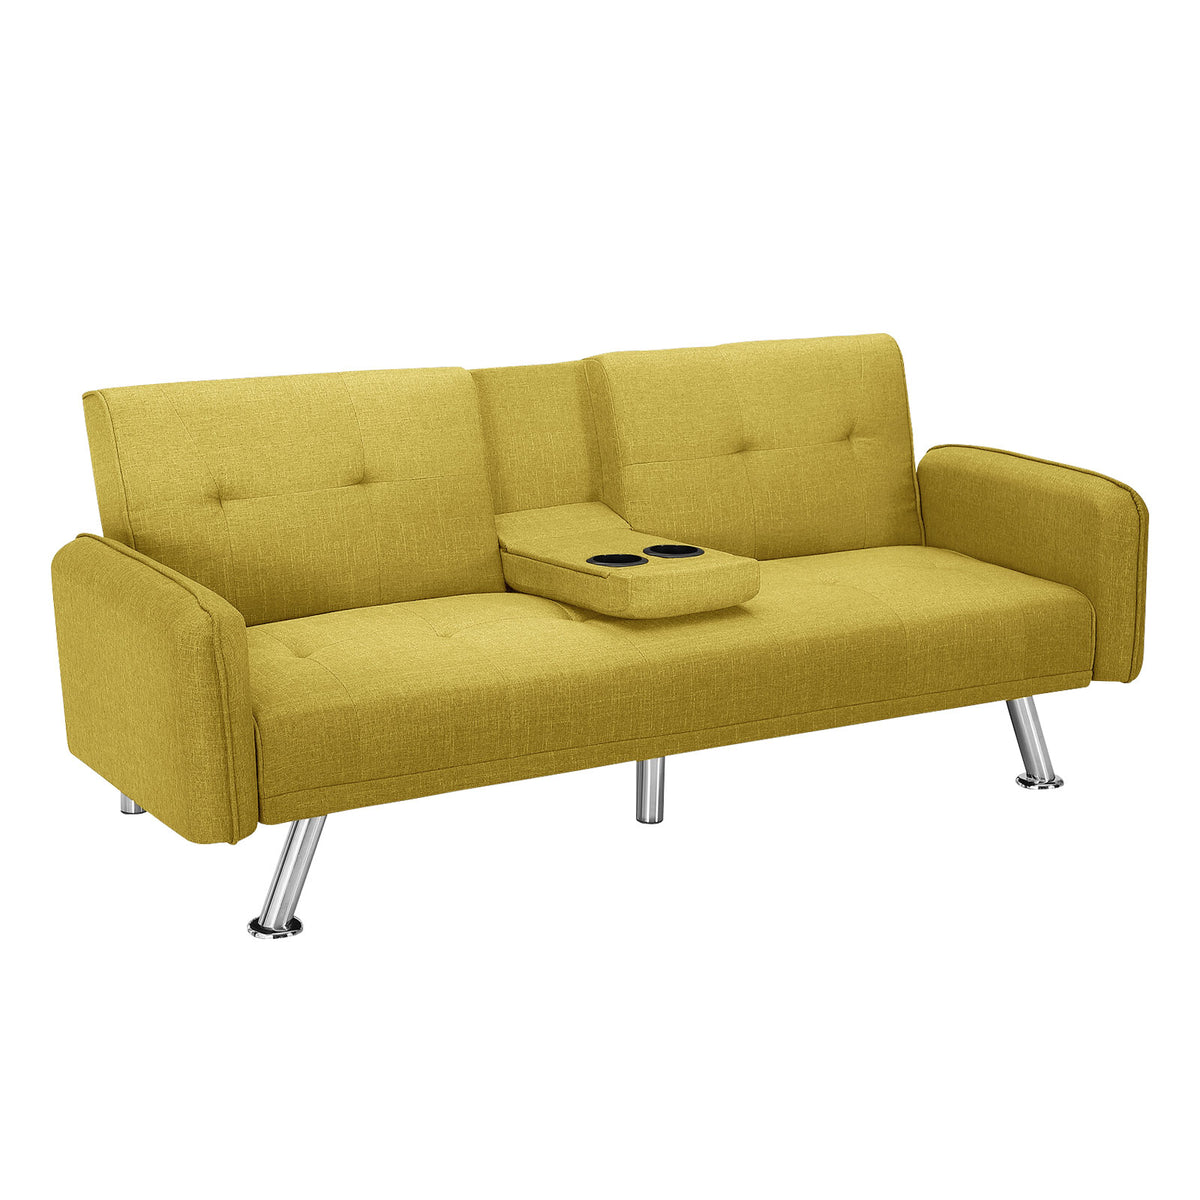 Geller Convertible Sofa Bed